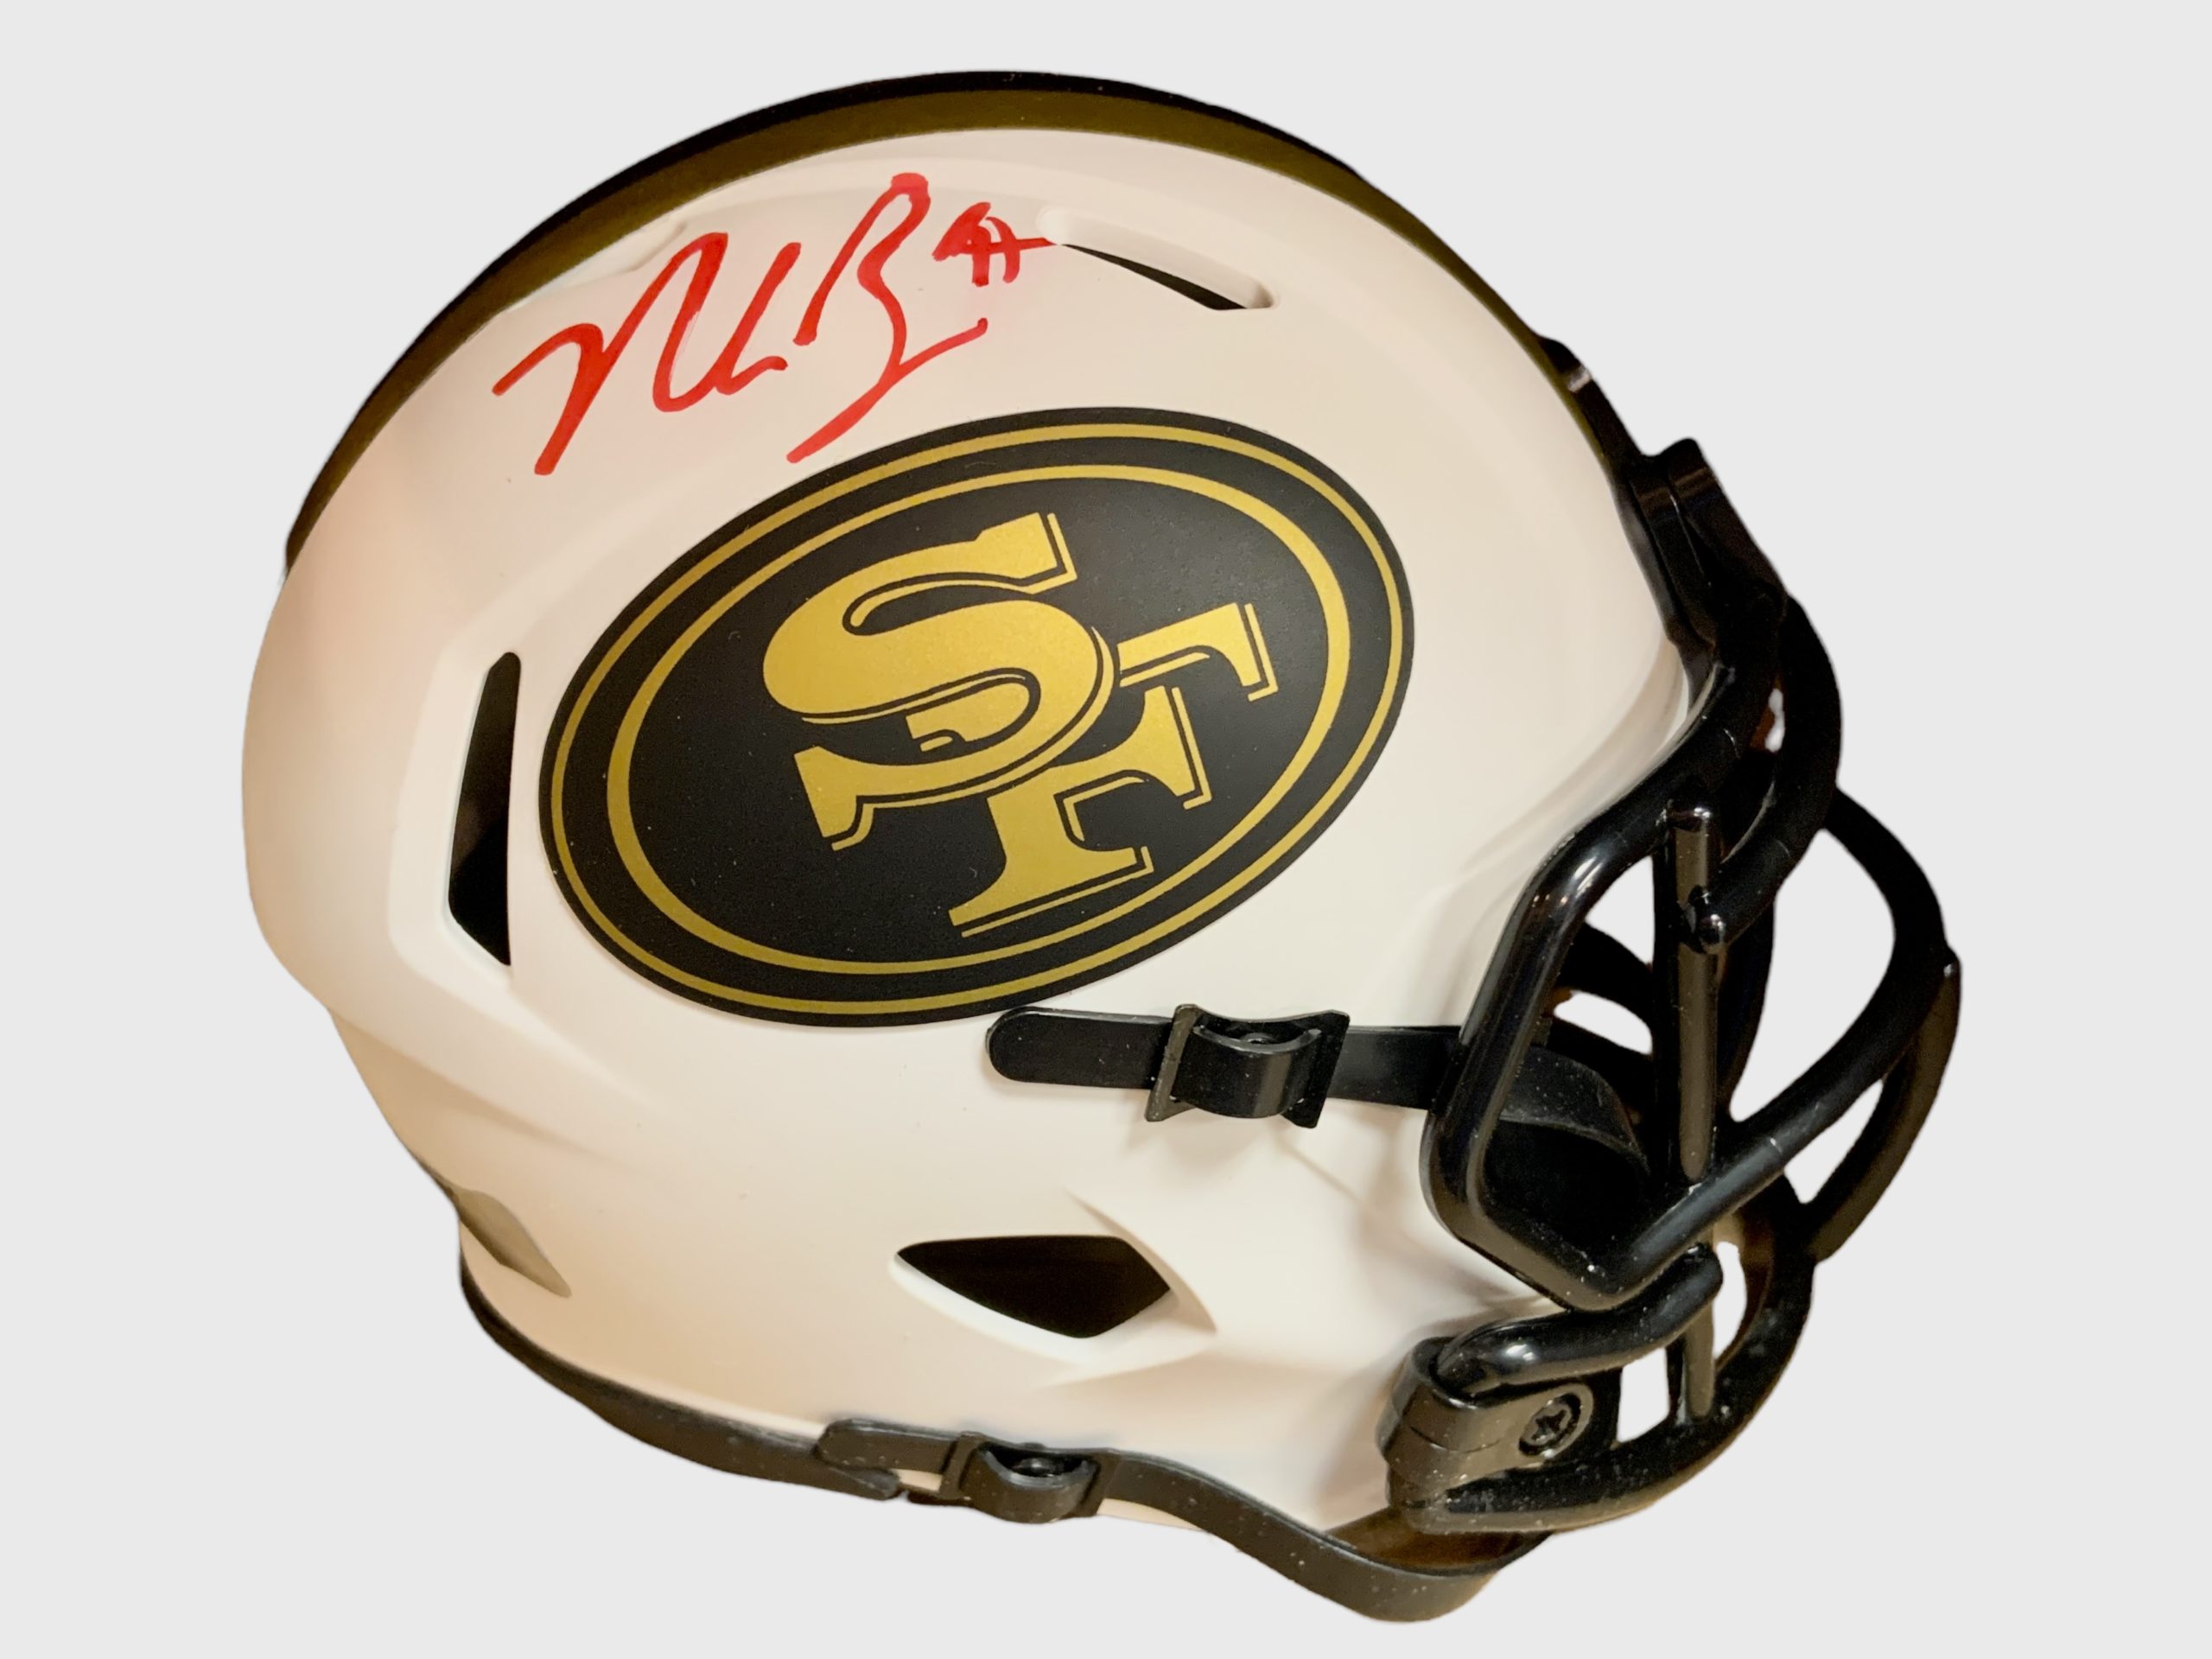 Nick Bosa Signed San Francisco 49ers Speed Lunar NFL Mini Helmet